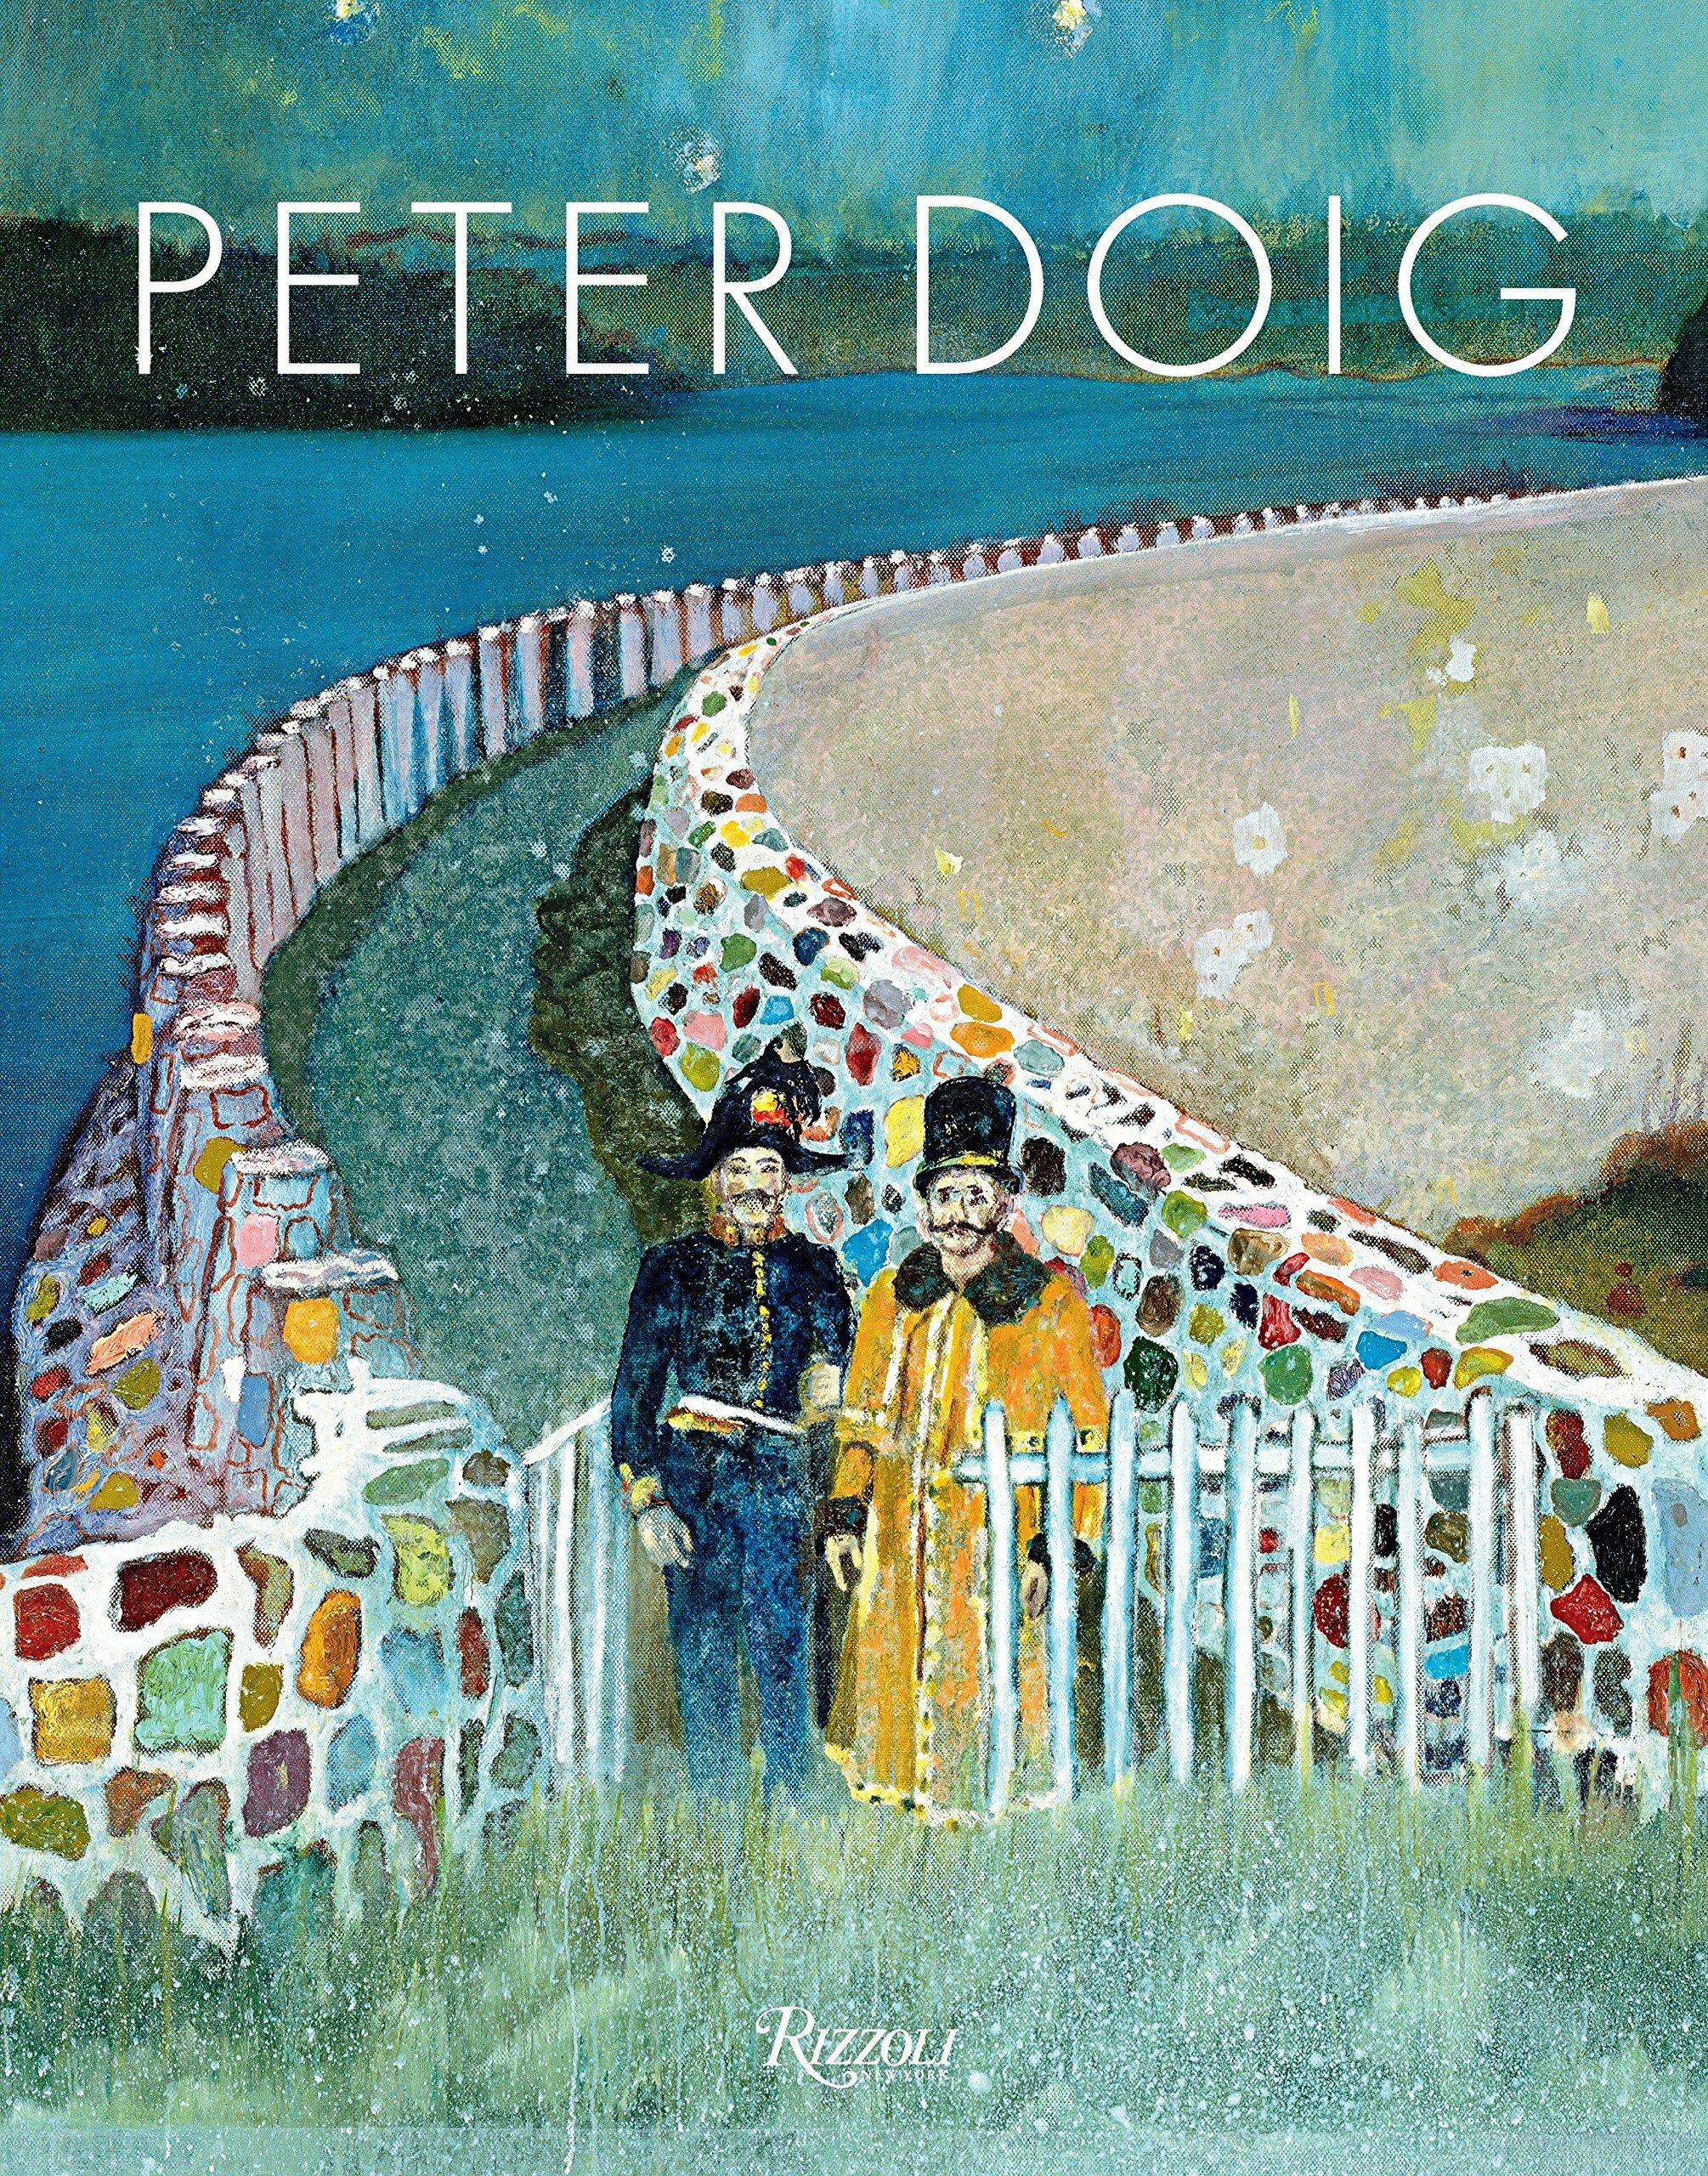 Peter Doig (Hardcover)